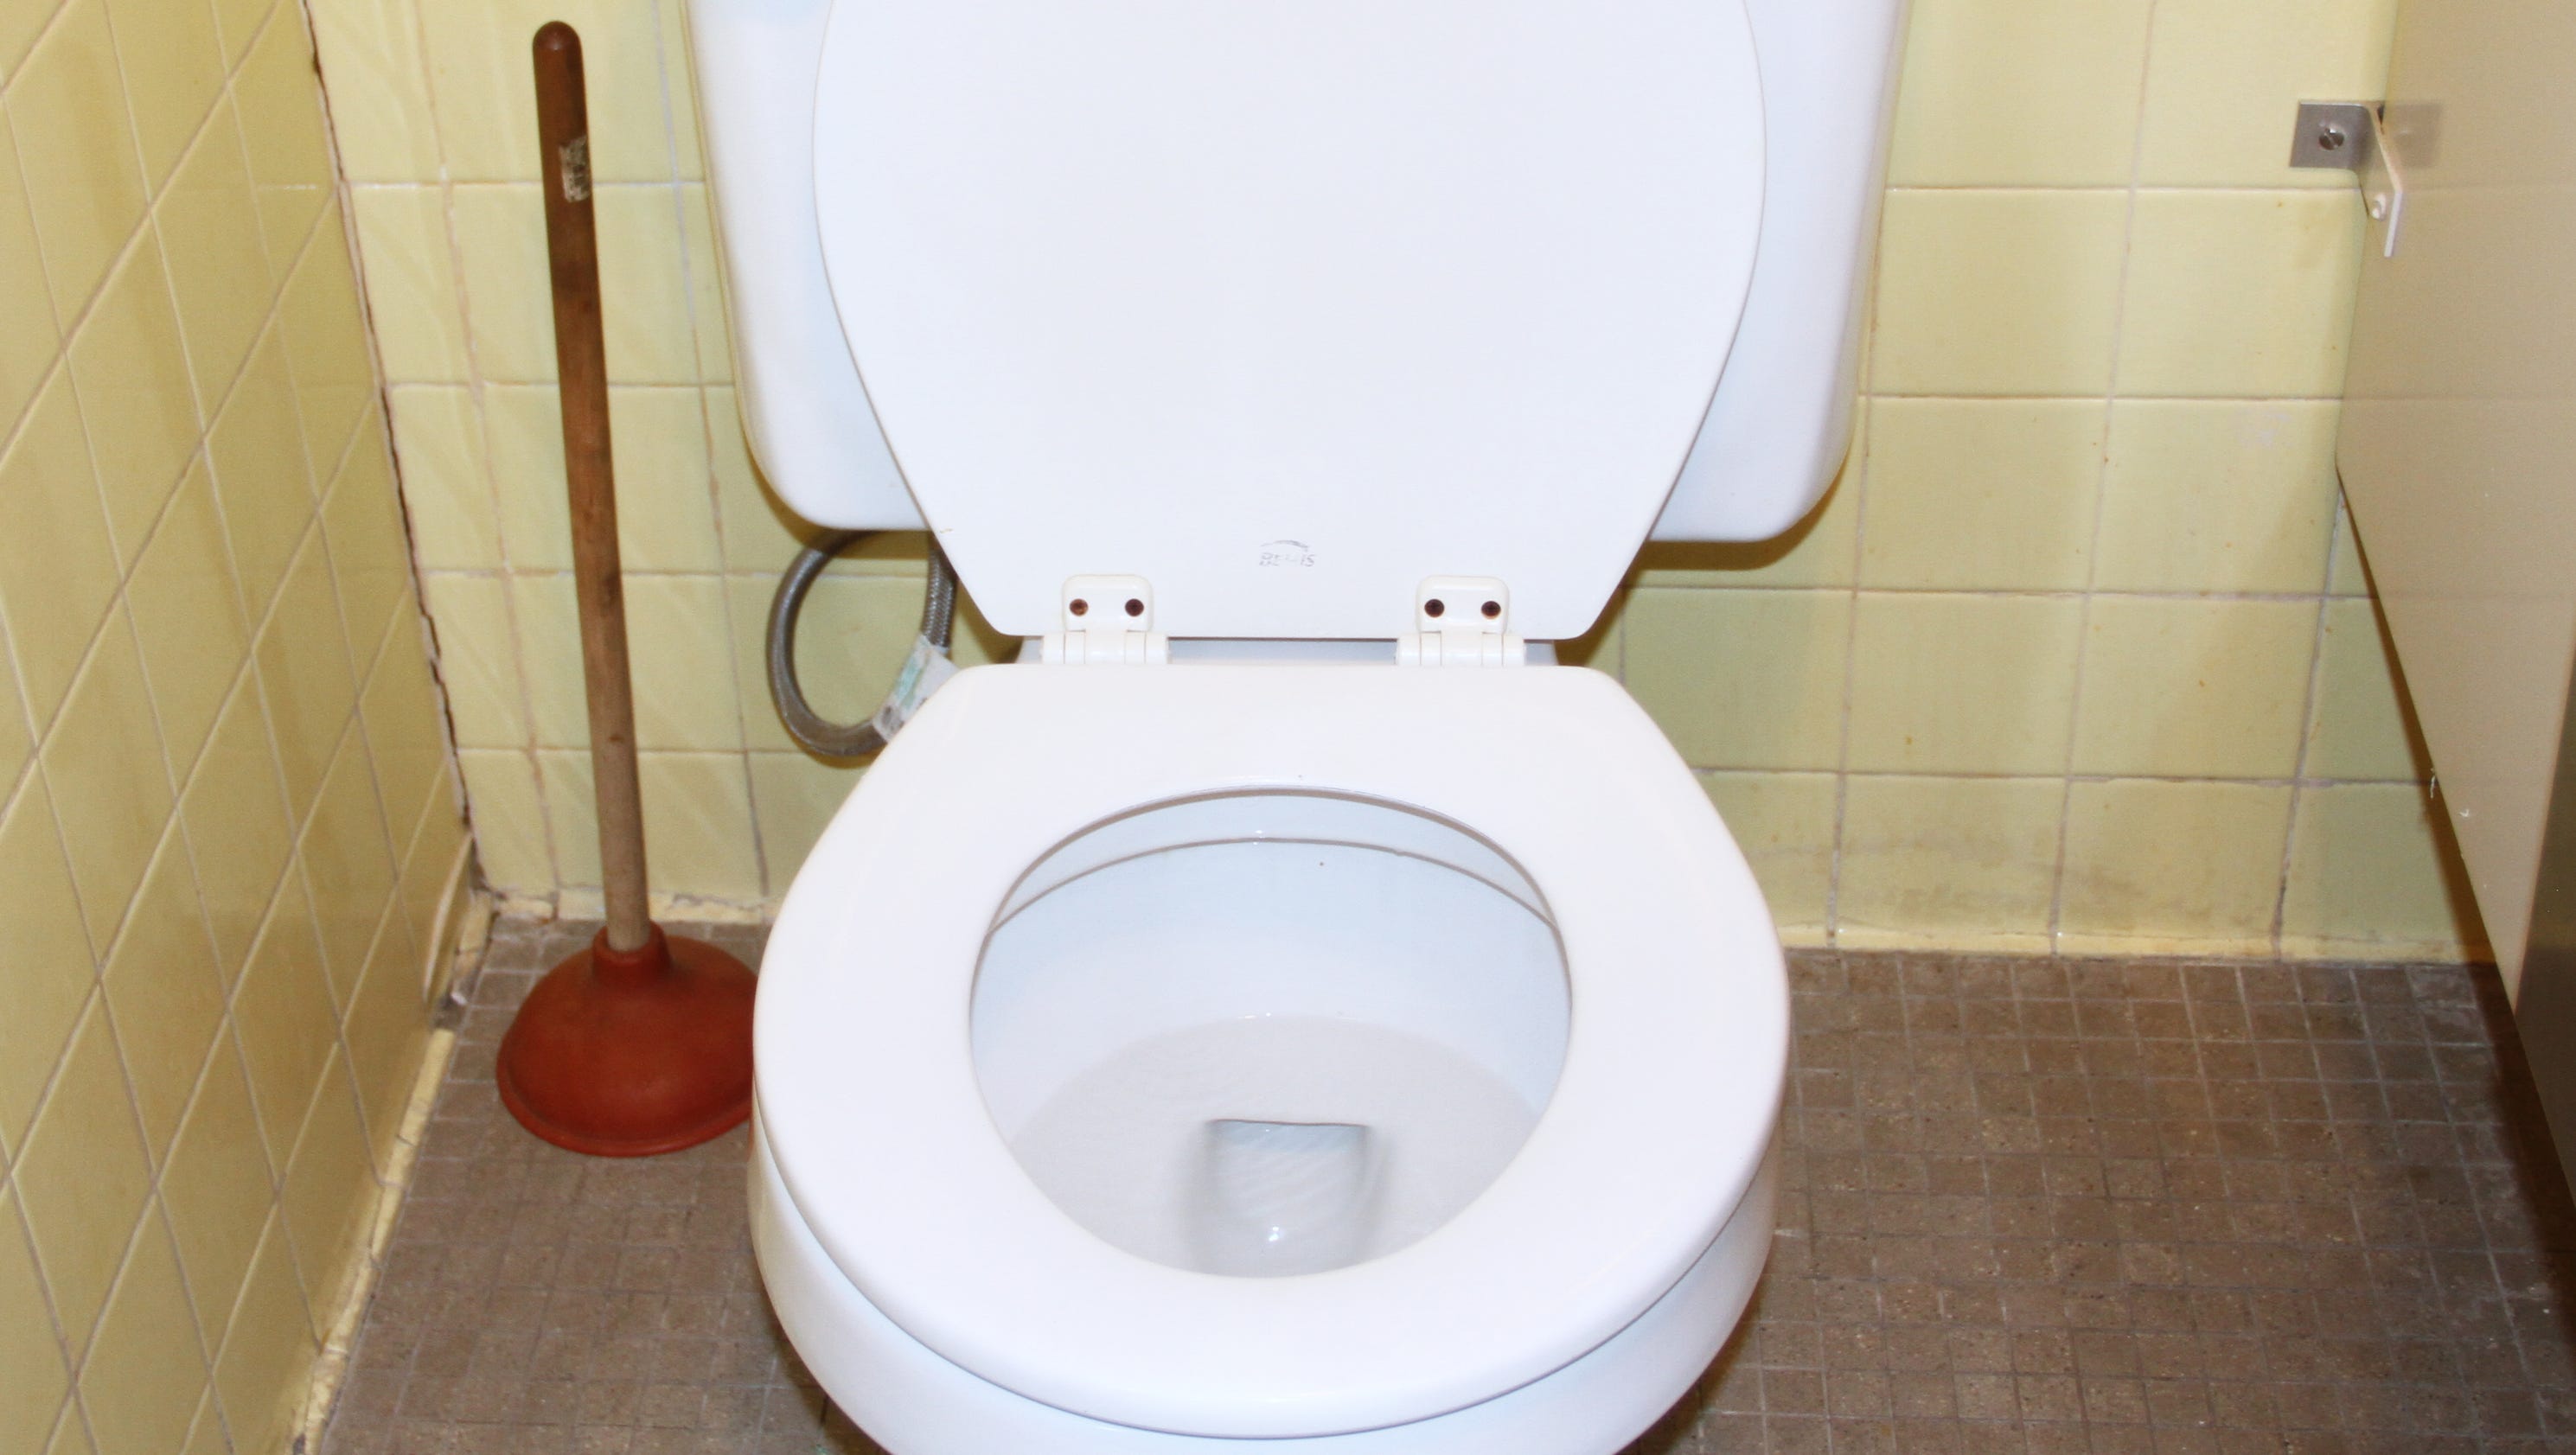 toilet-rebate-program-laredo-utilities-department